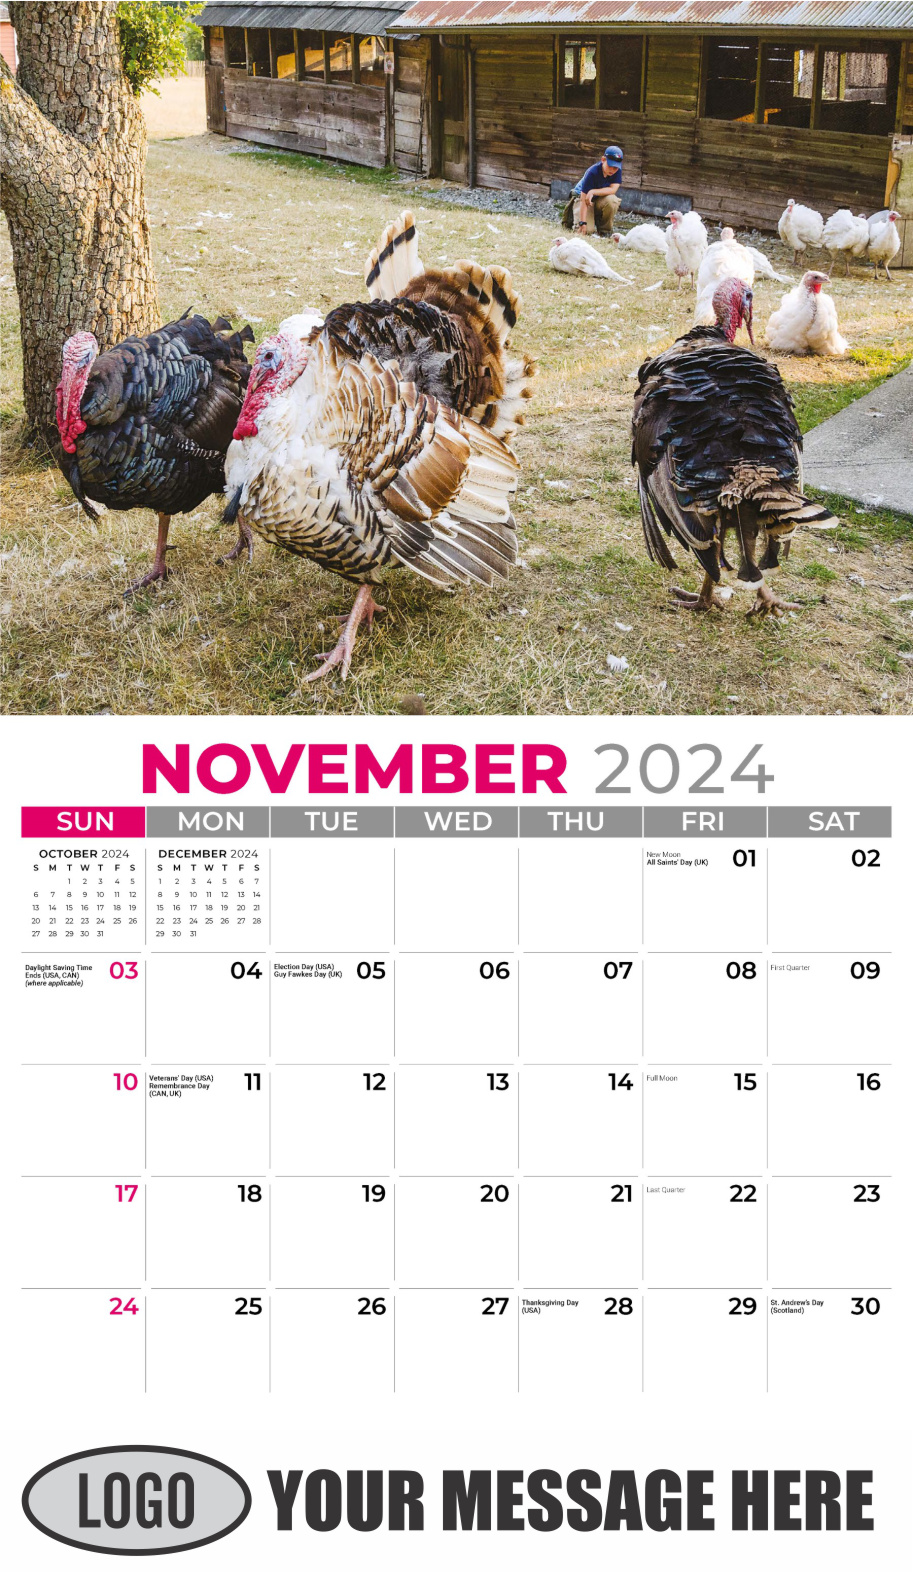 Country Spirit 2024 Business Advertising Calendar - November